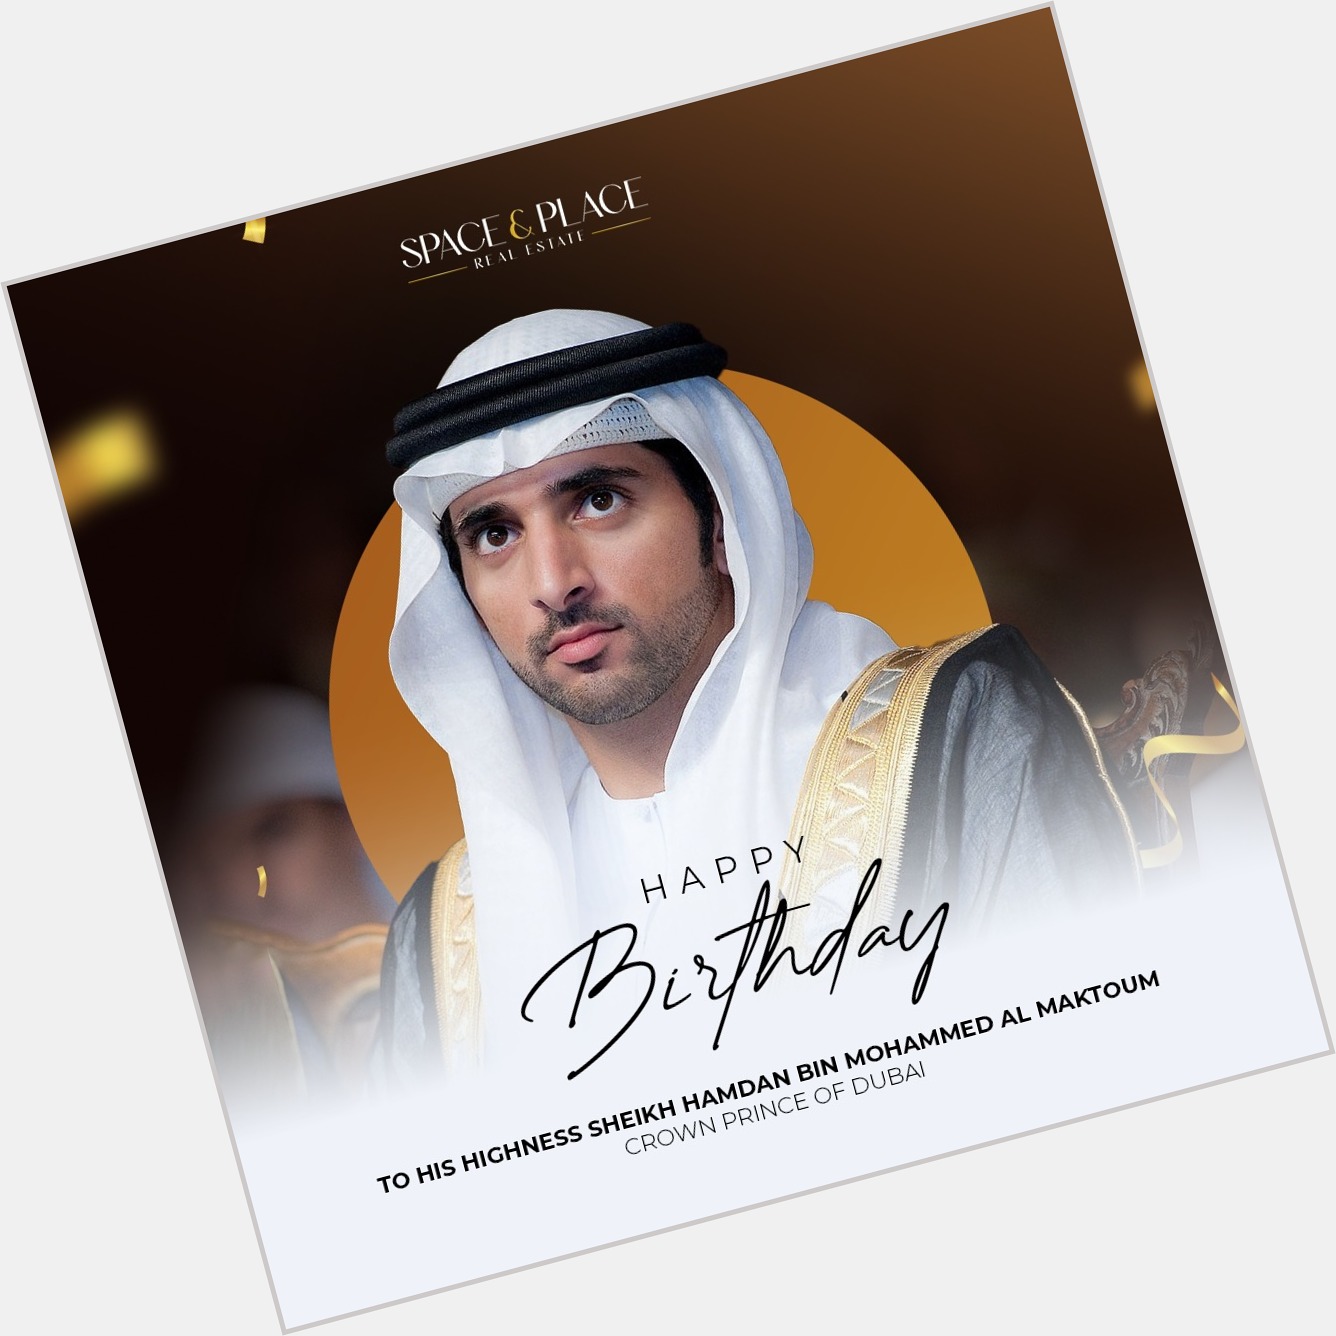 Happy Birthday to His Highness Sheikh Hamdan Bin Mohammed Al Maktoum, Crown Prince of Dubai. 